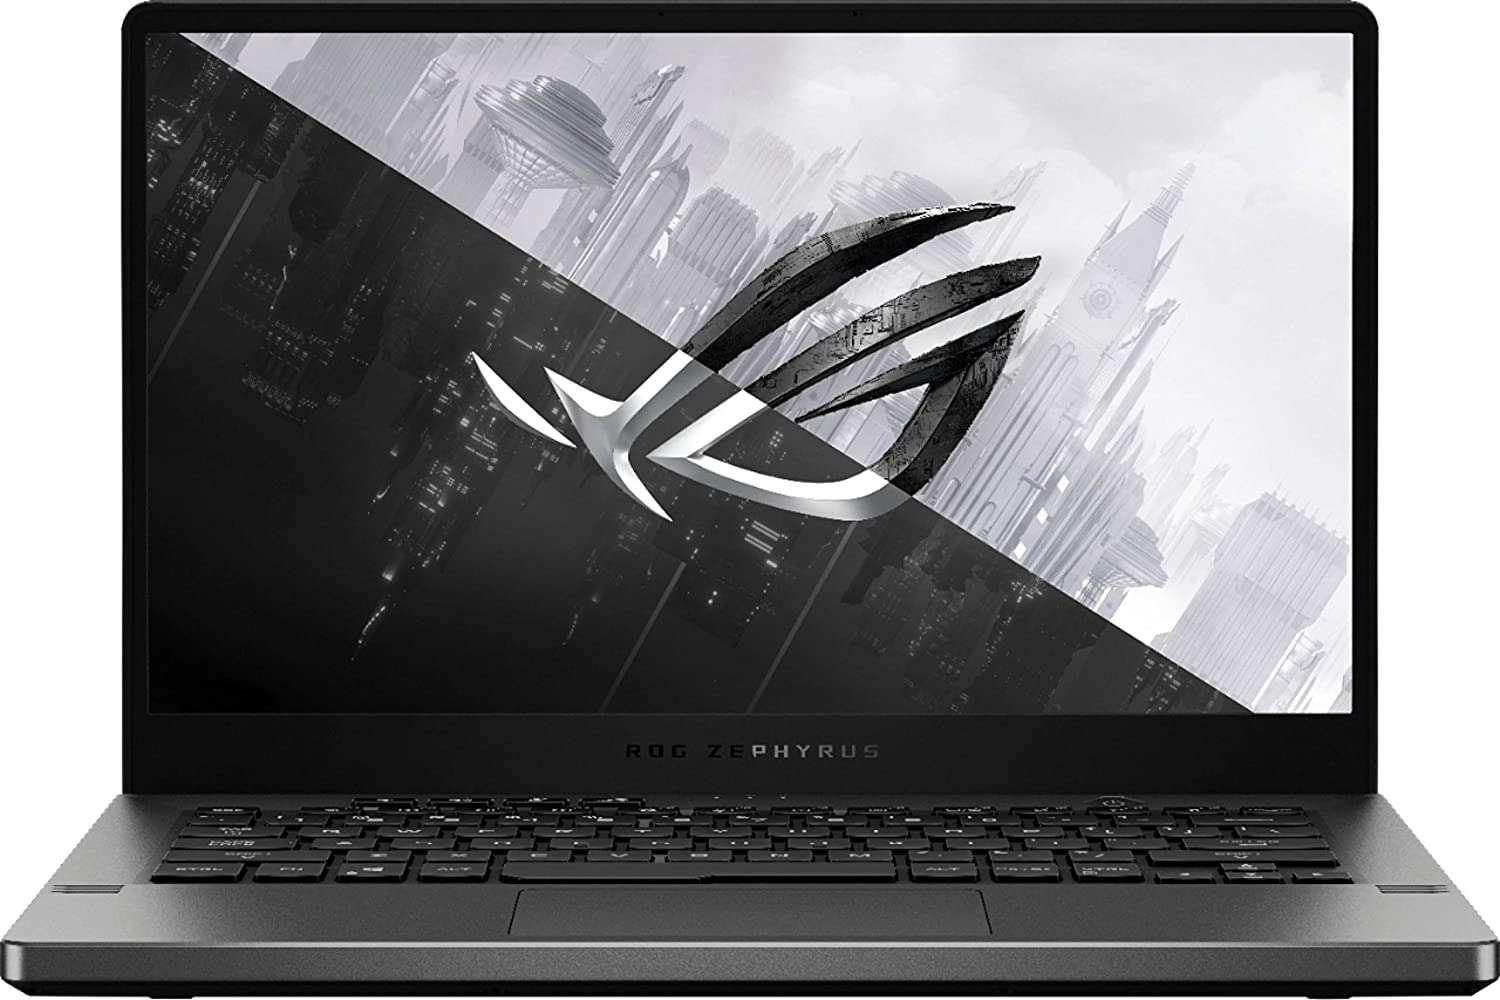 ASUS-ROG-Zephyrus-G14-Best-Gaming-Laptop-for-Construction-Management